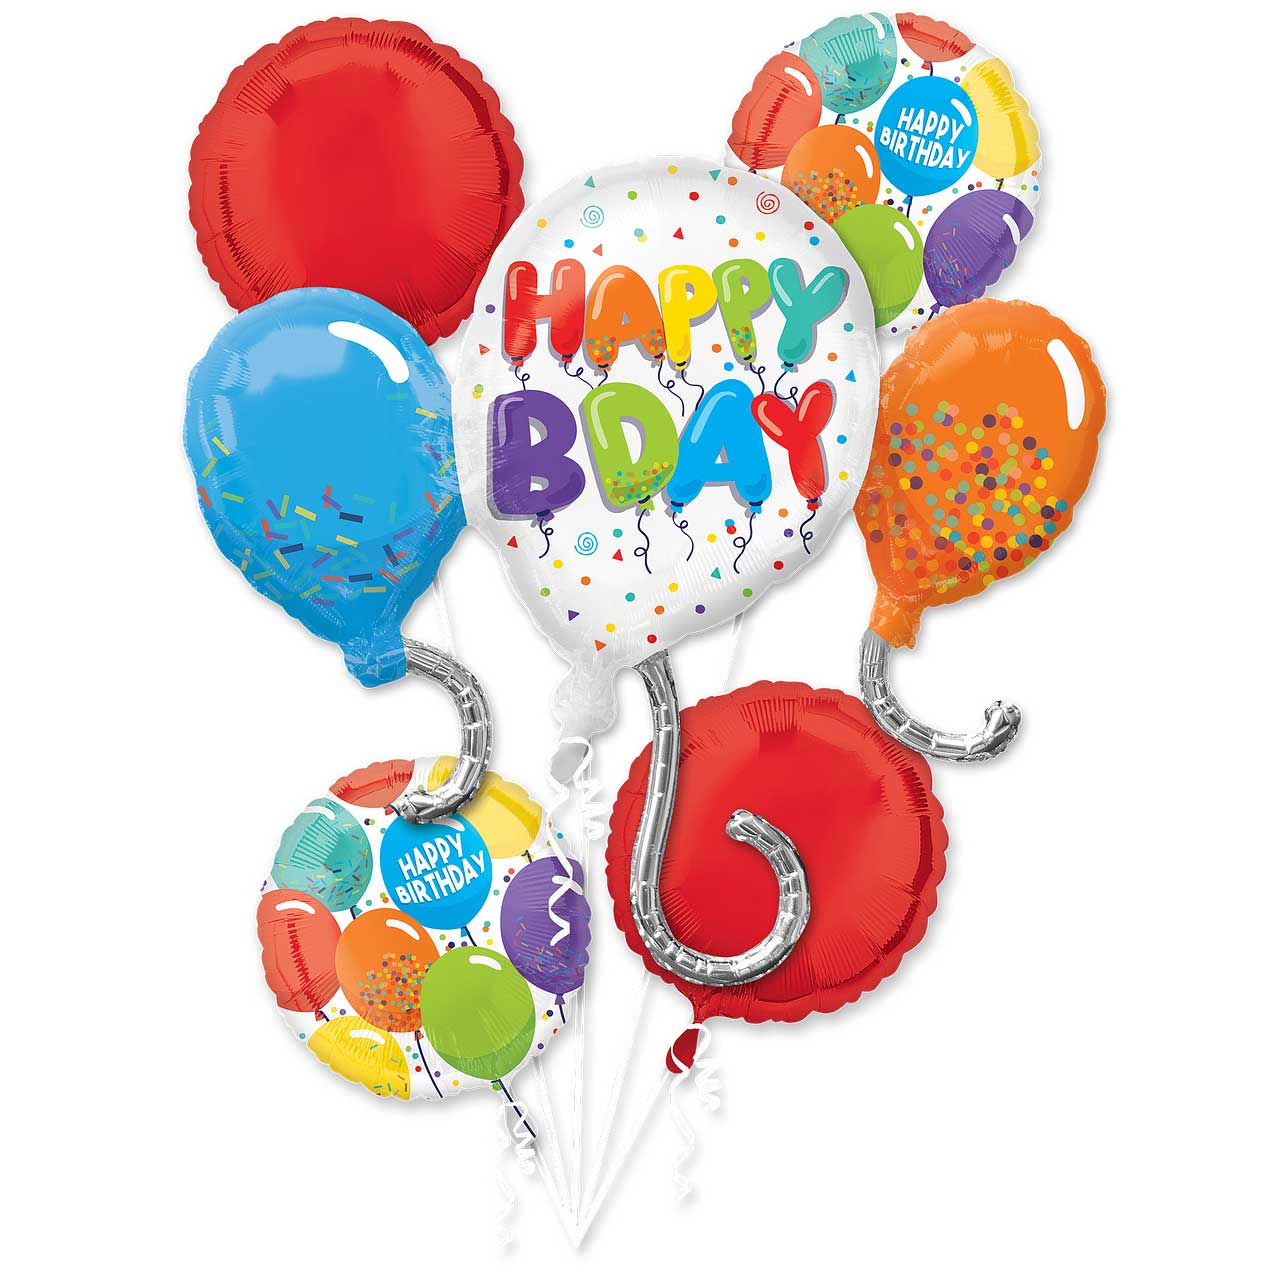 Birthday Celebration Balloon Bouquet - Party Centre